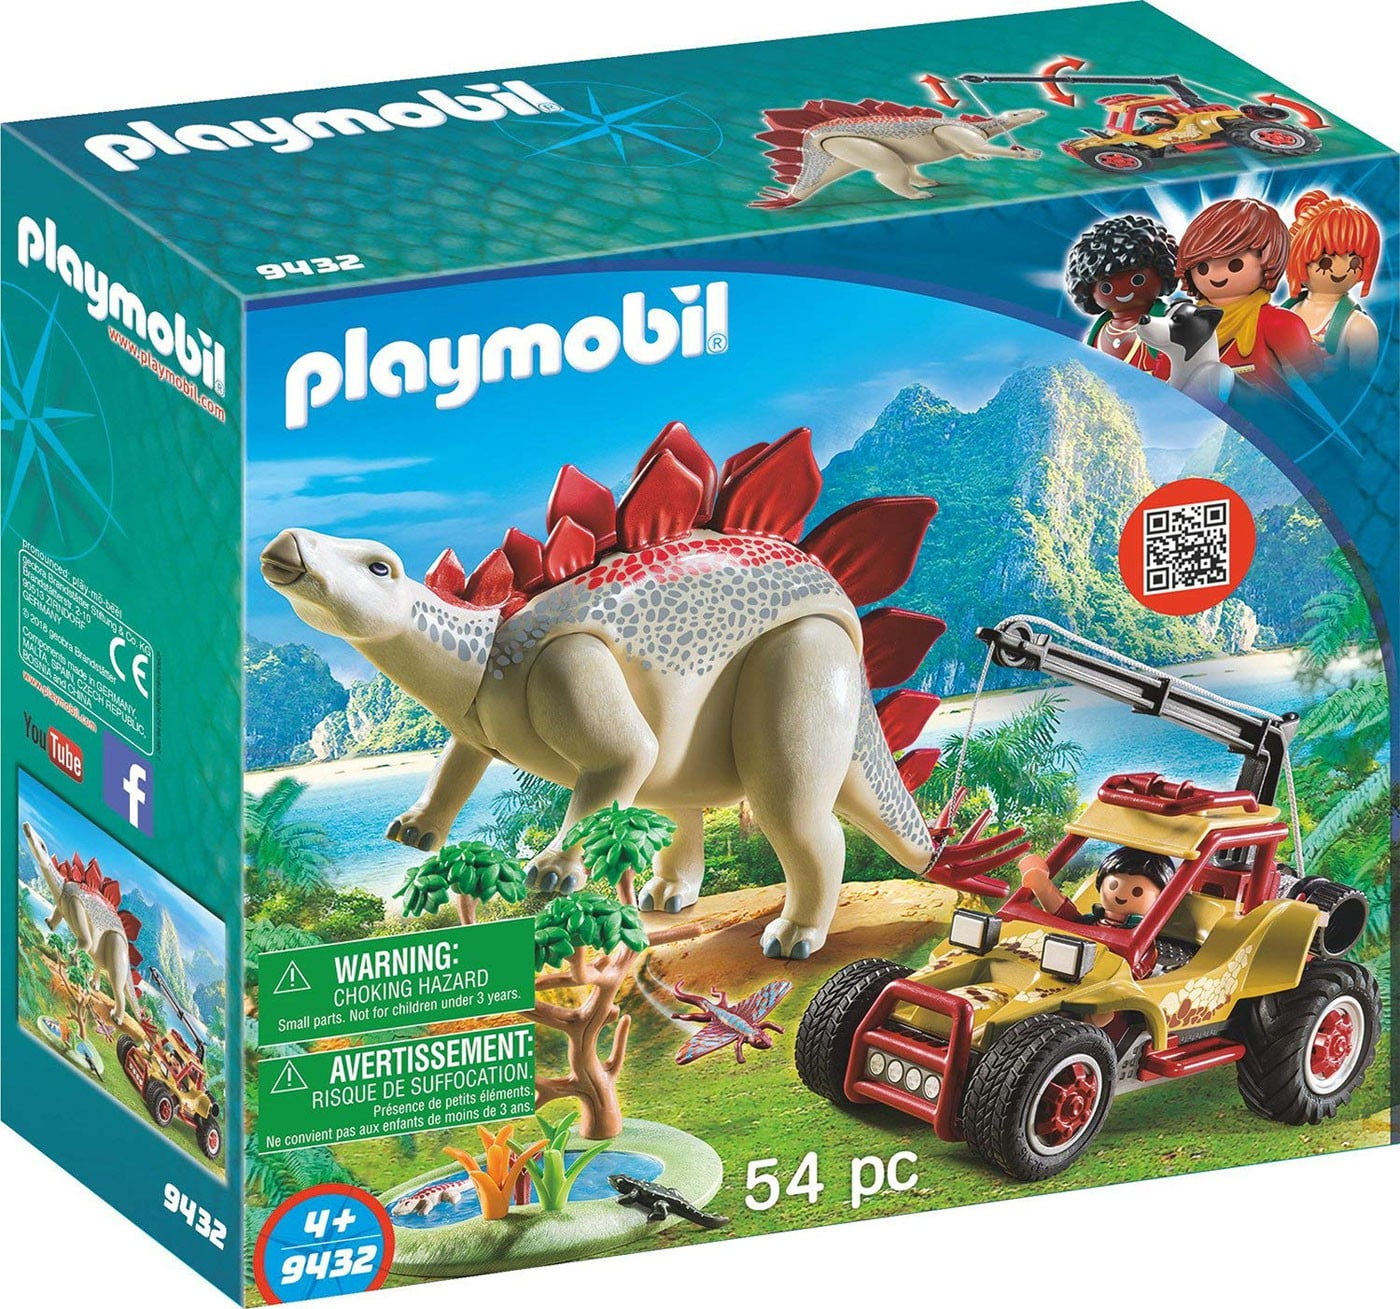 no longer available in retail Dinos Playmobil 5235 Dinosaur Sealed Brand New 